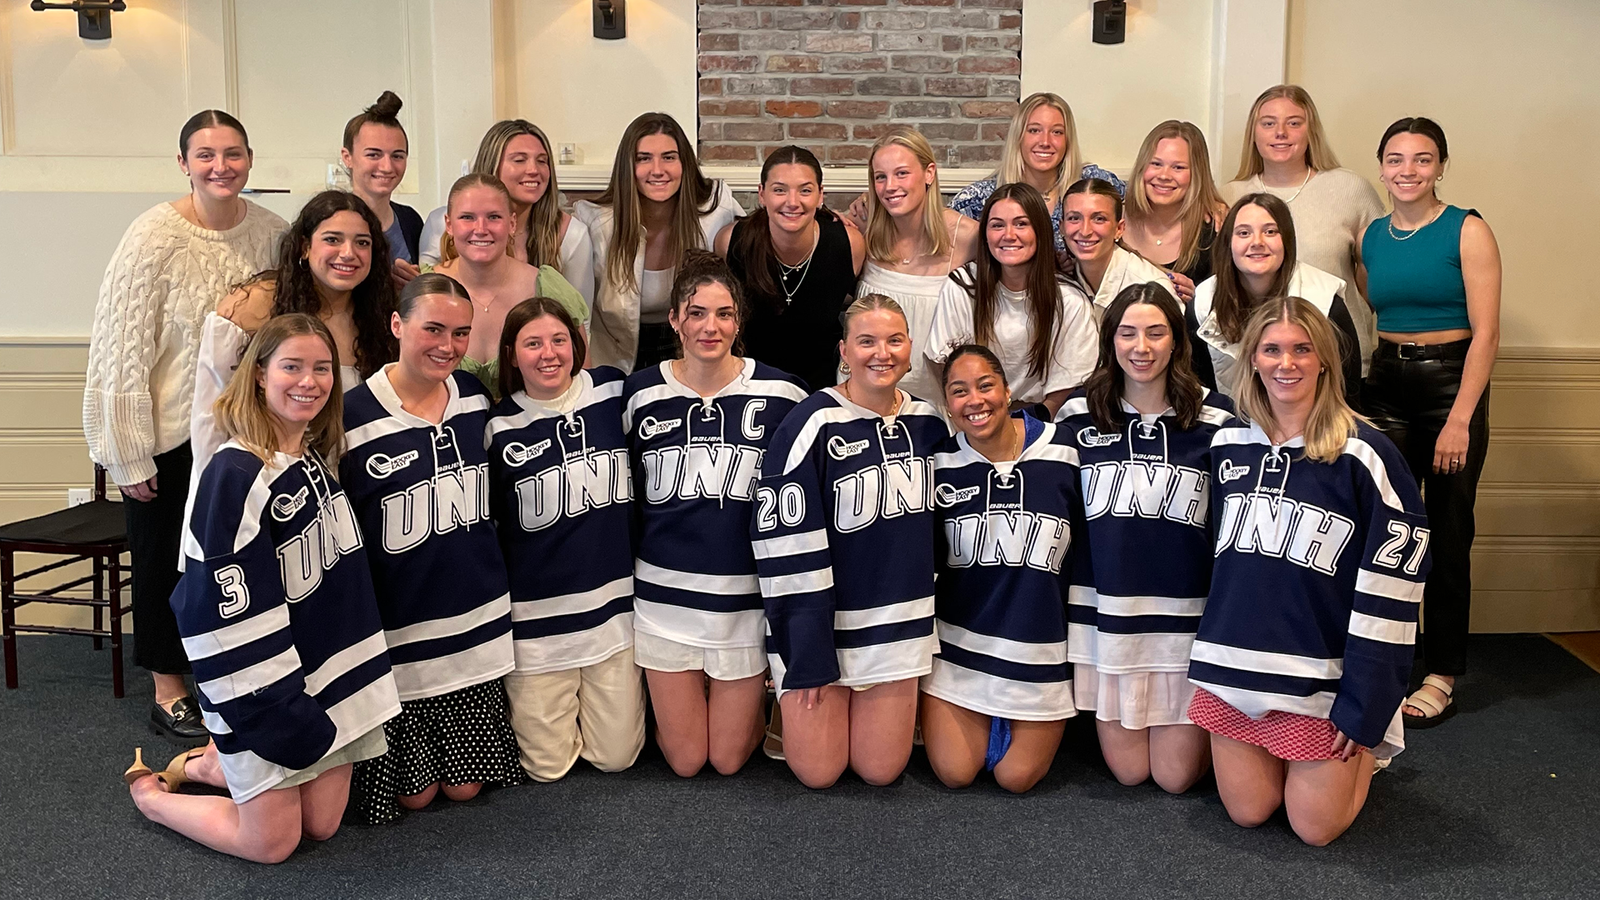 Team Awards Announced at Annual Women’s Hockey Banquet